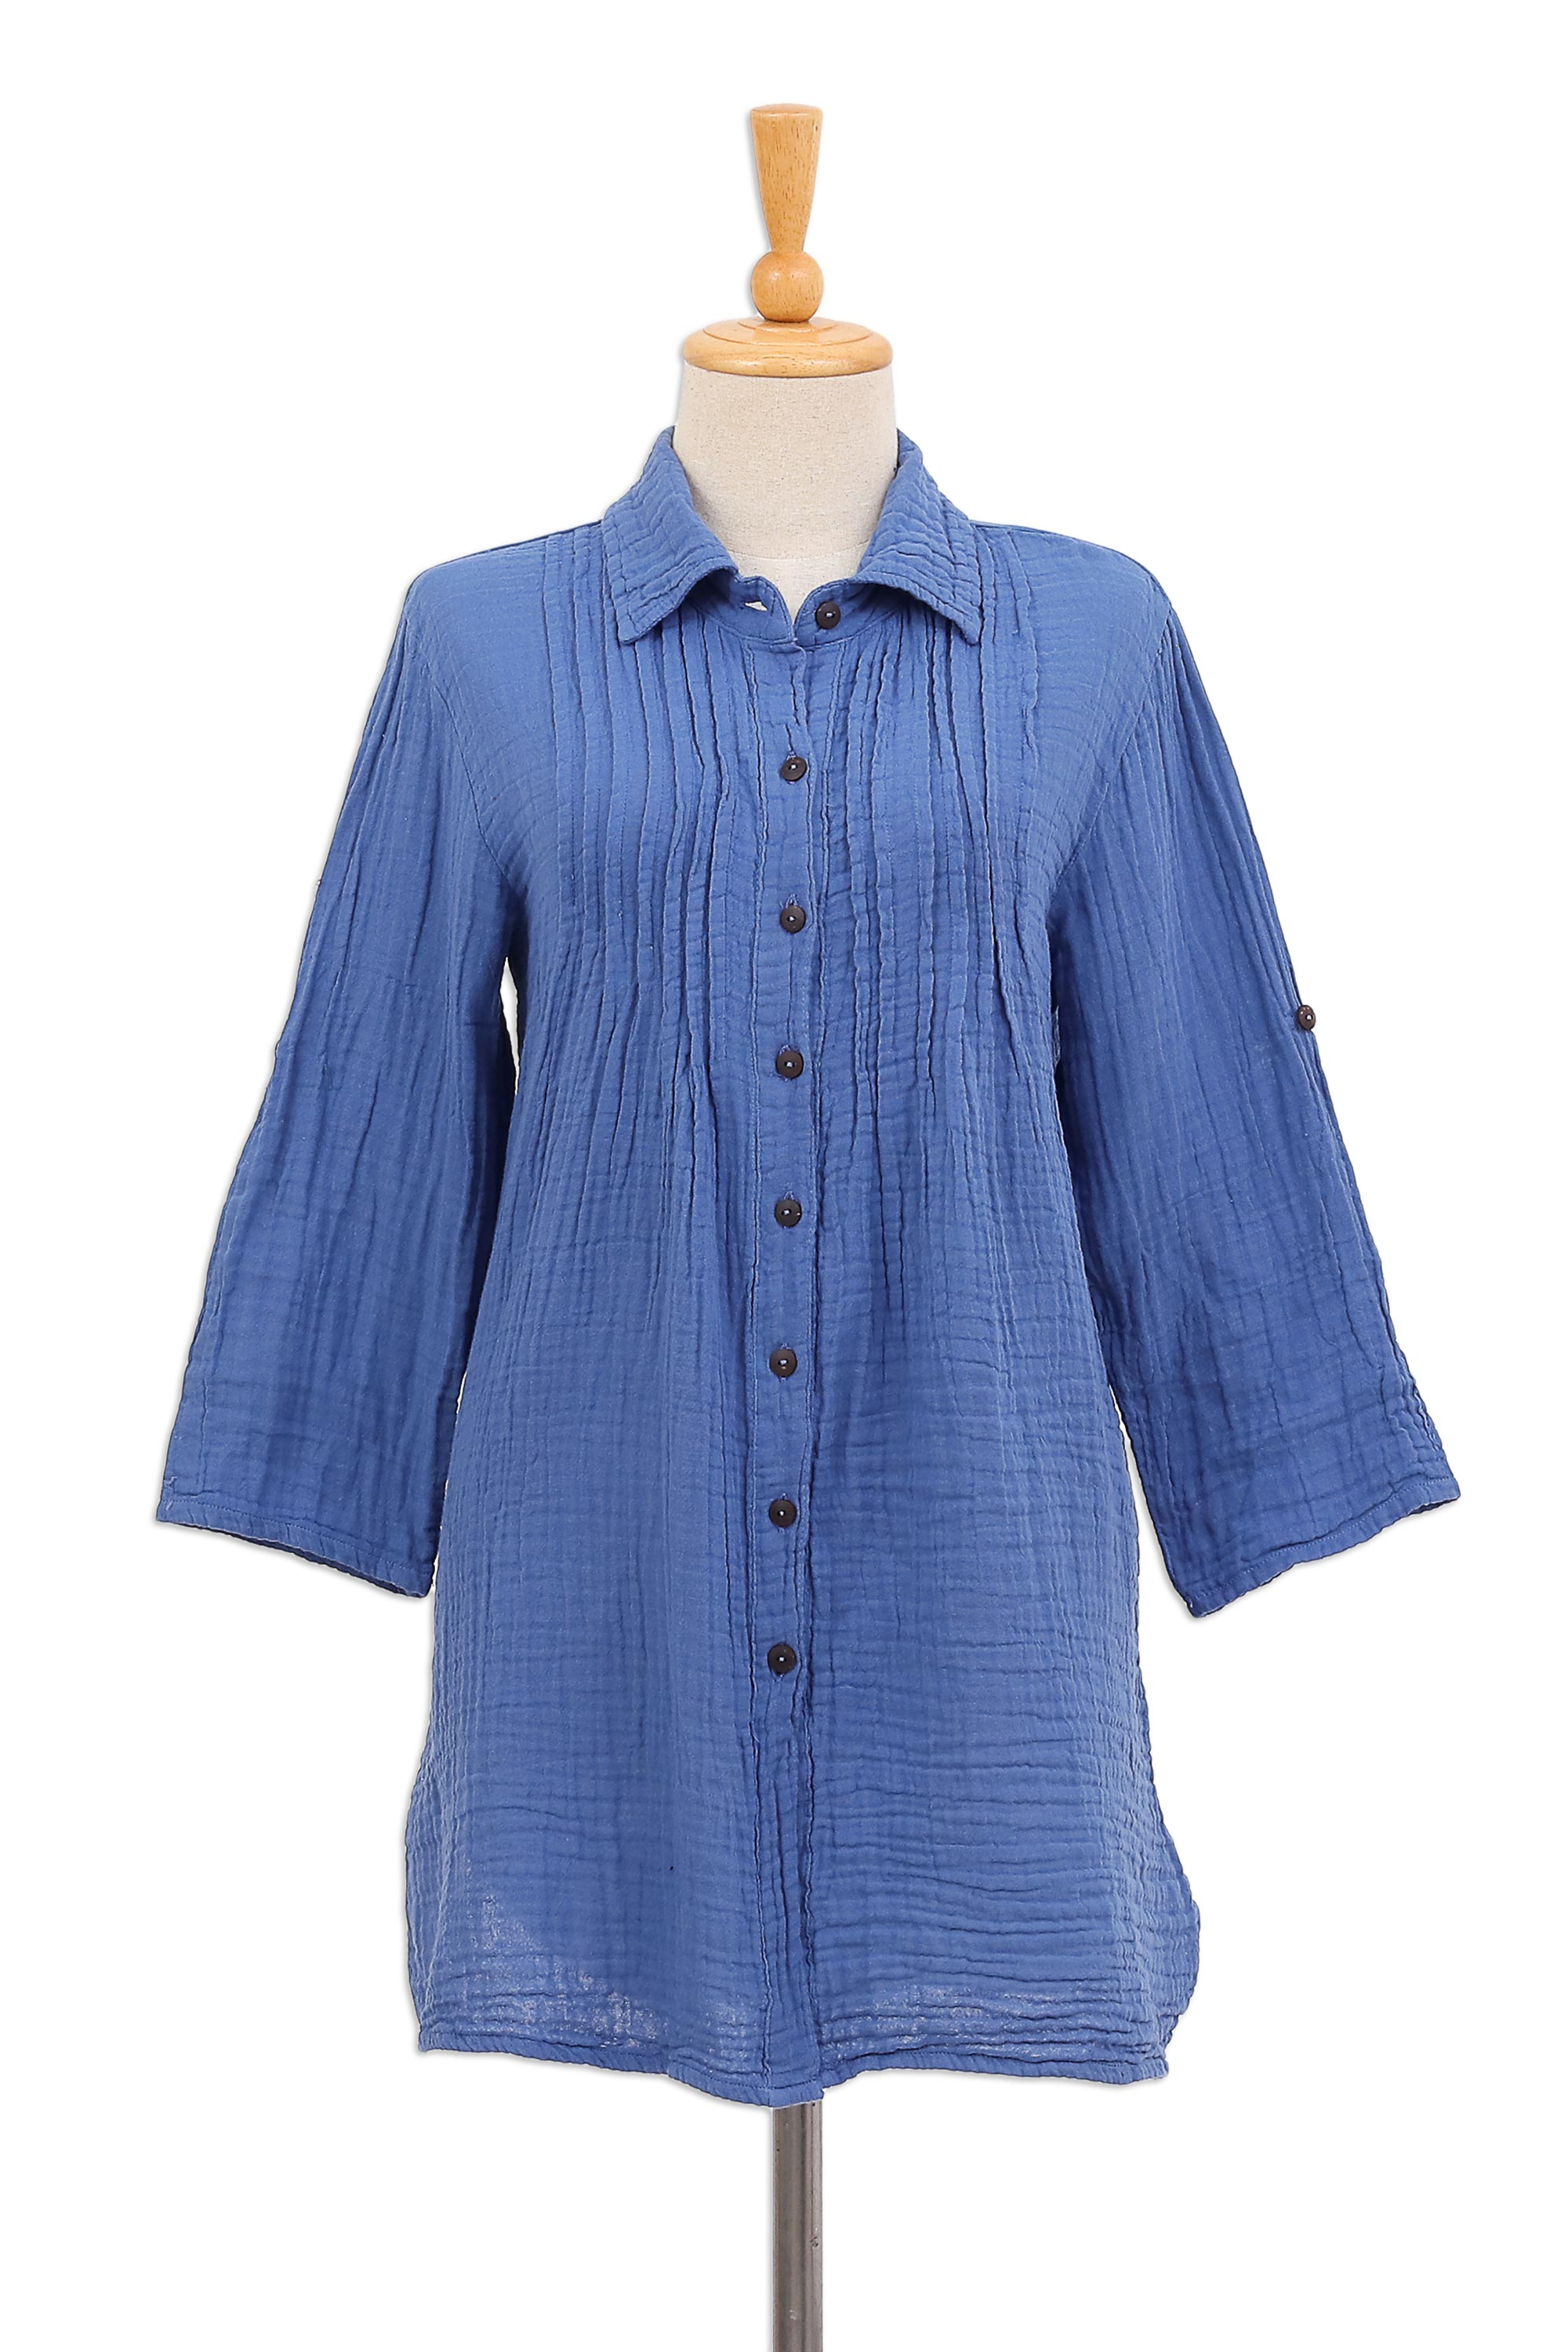 UNICEF Market | Blue Cotton Gauze Shirt from Thailand - Periwinkle Pintucks